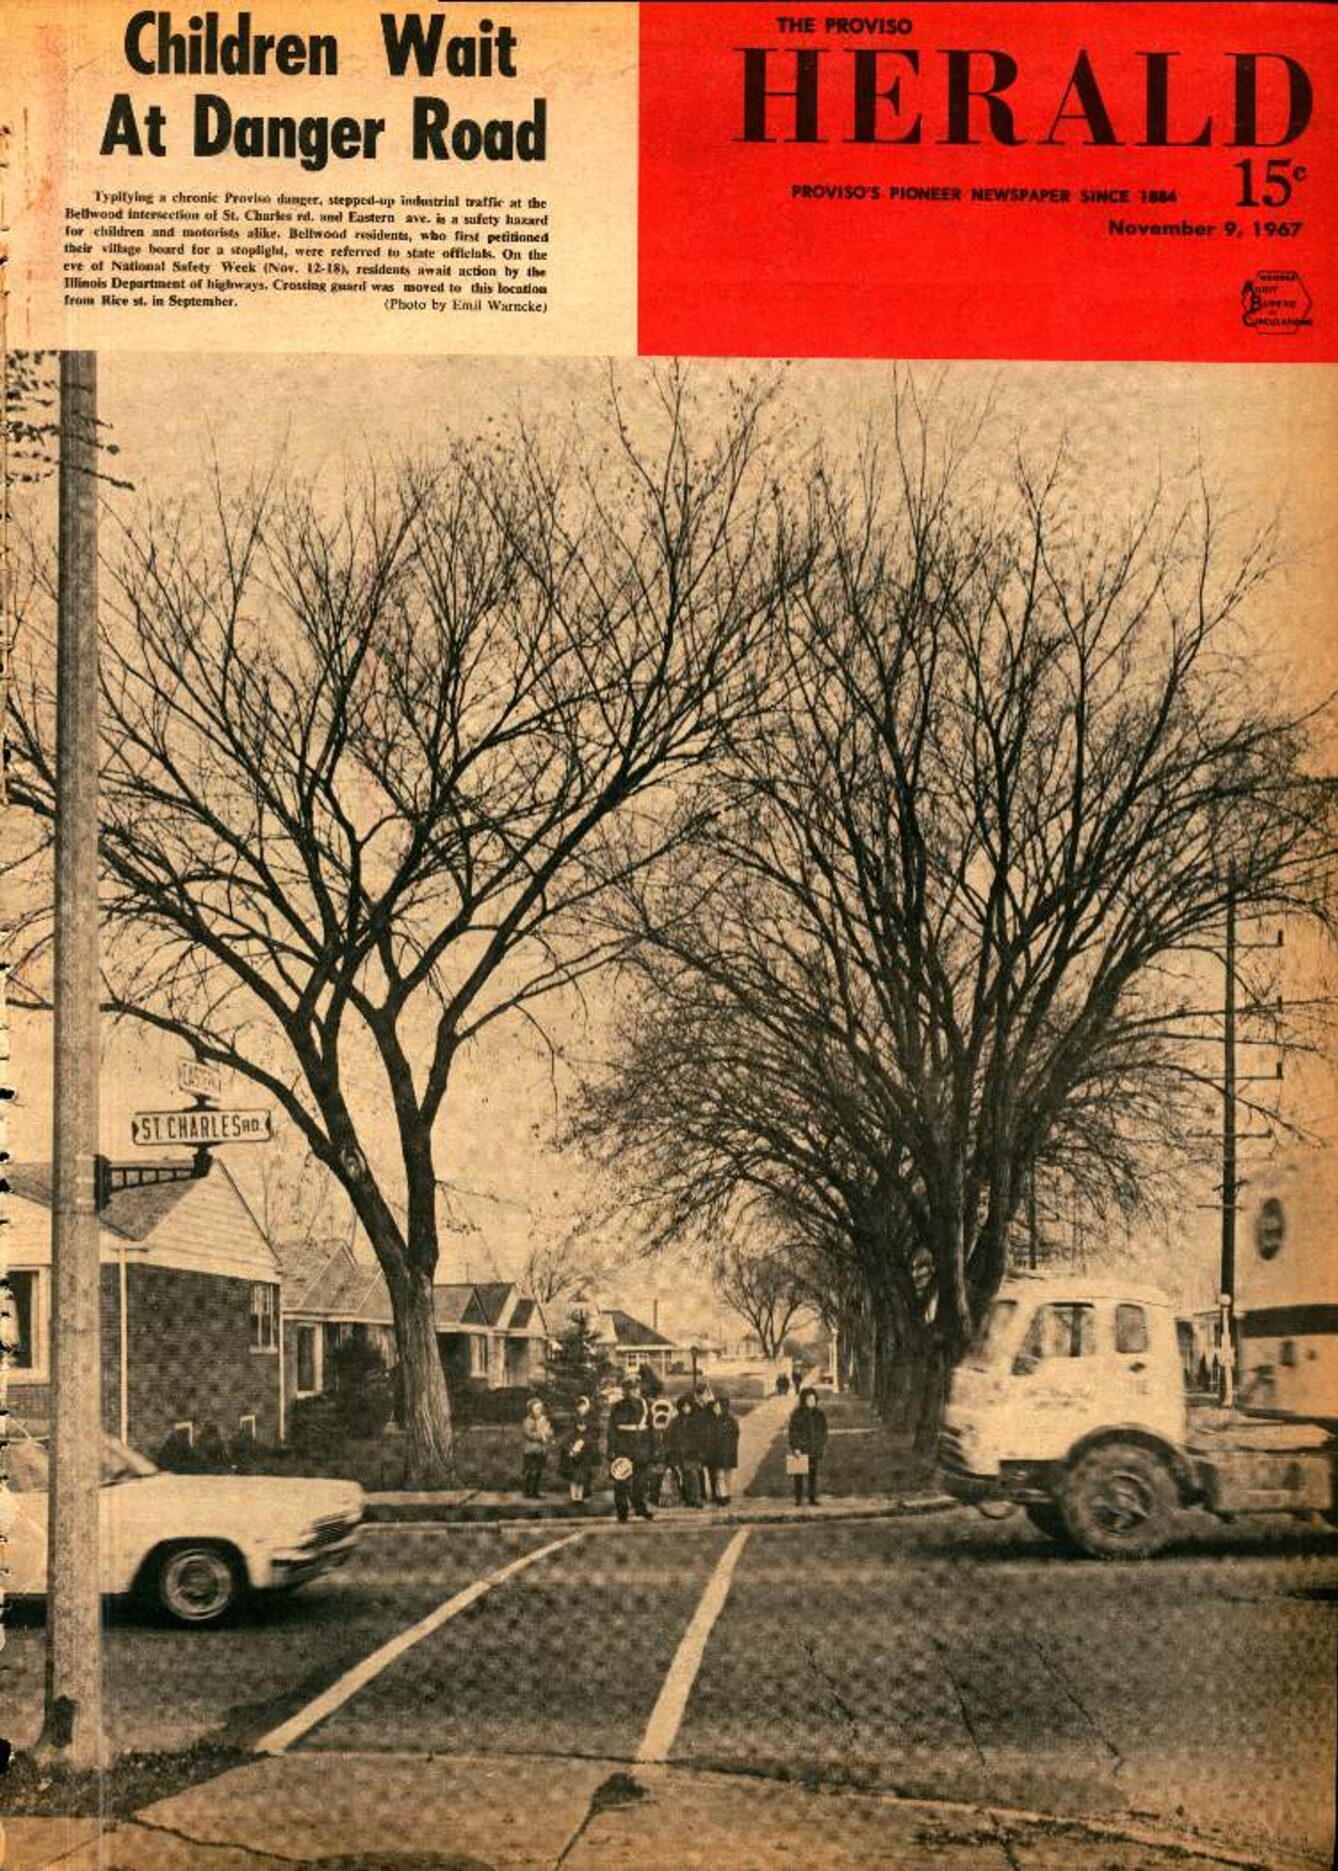 The Herald – 19671109